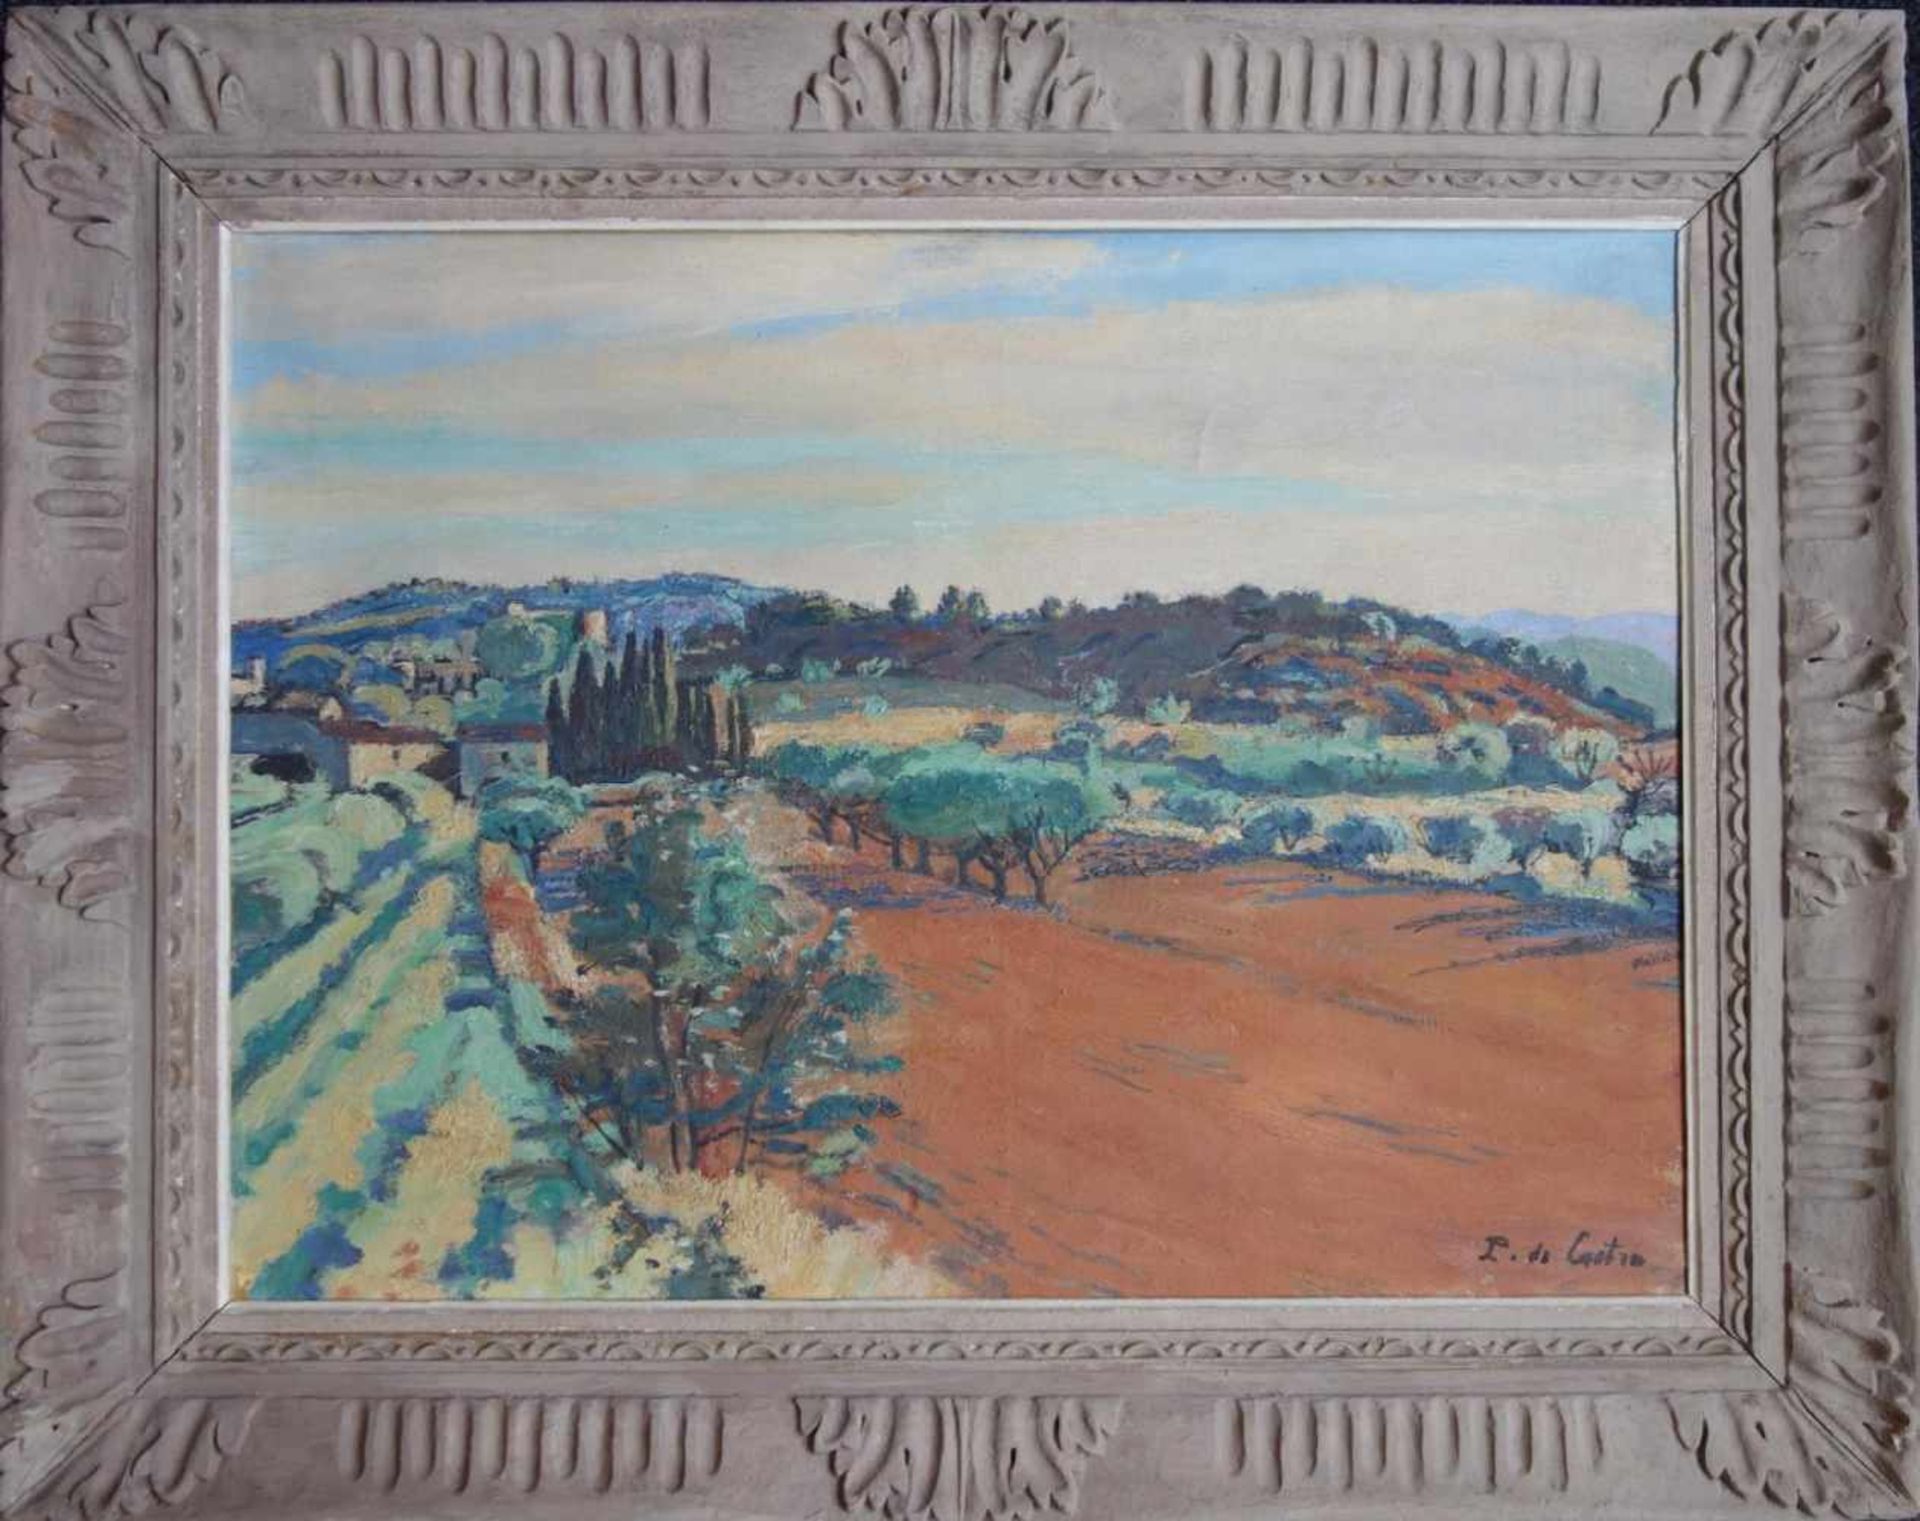 de Castro, Paul, "Landschaft in der Provence" 1882 Paris - 1939 ebenda; Öl/Lwd., signiert, 60*